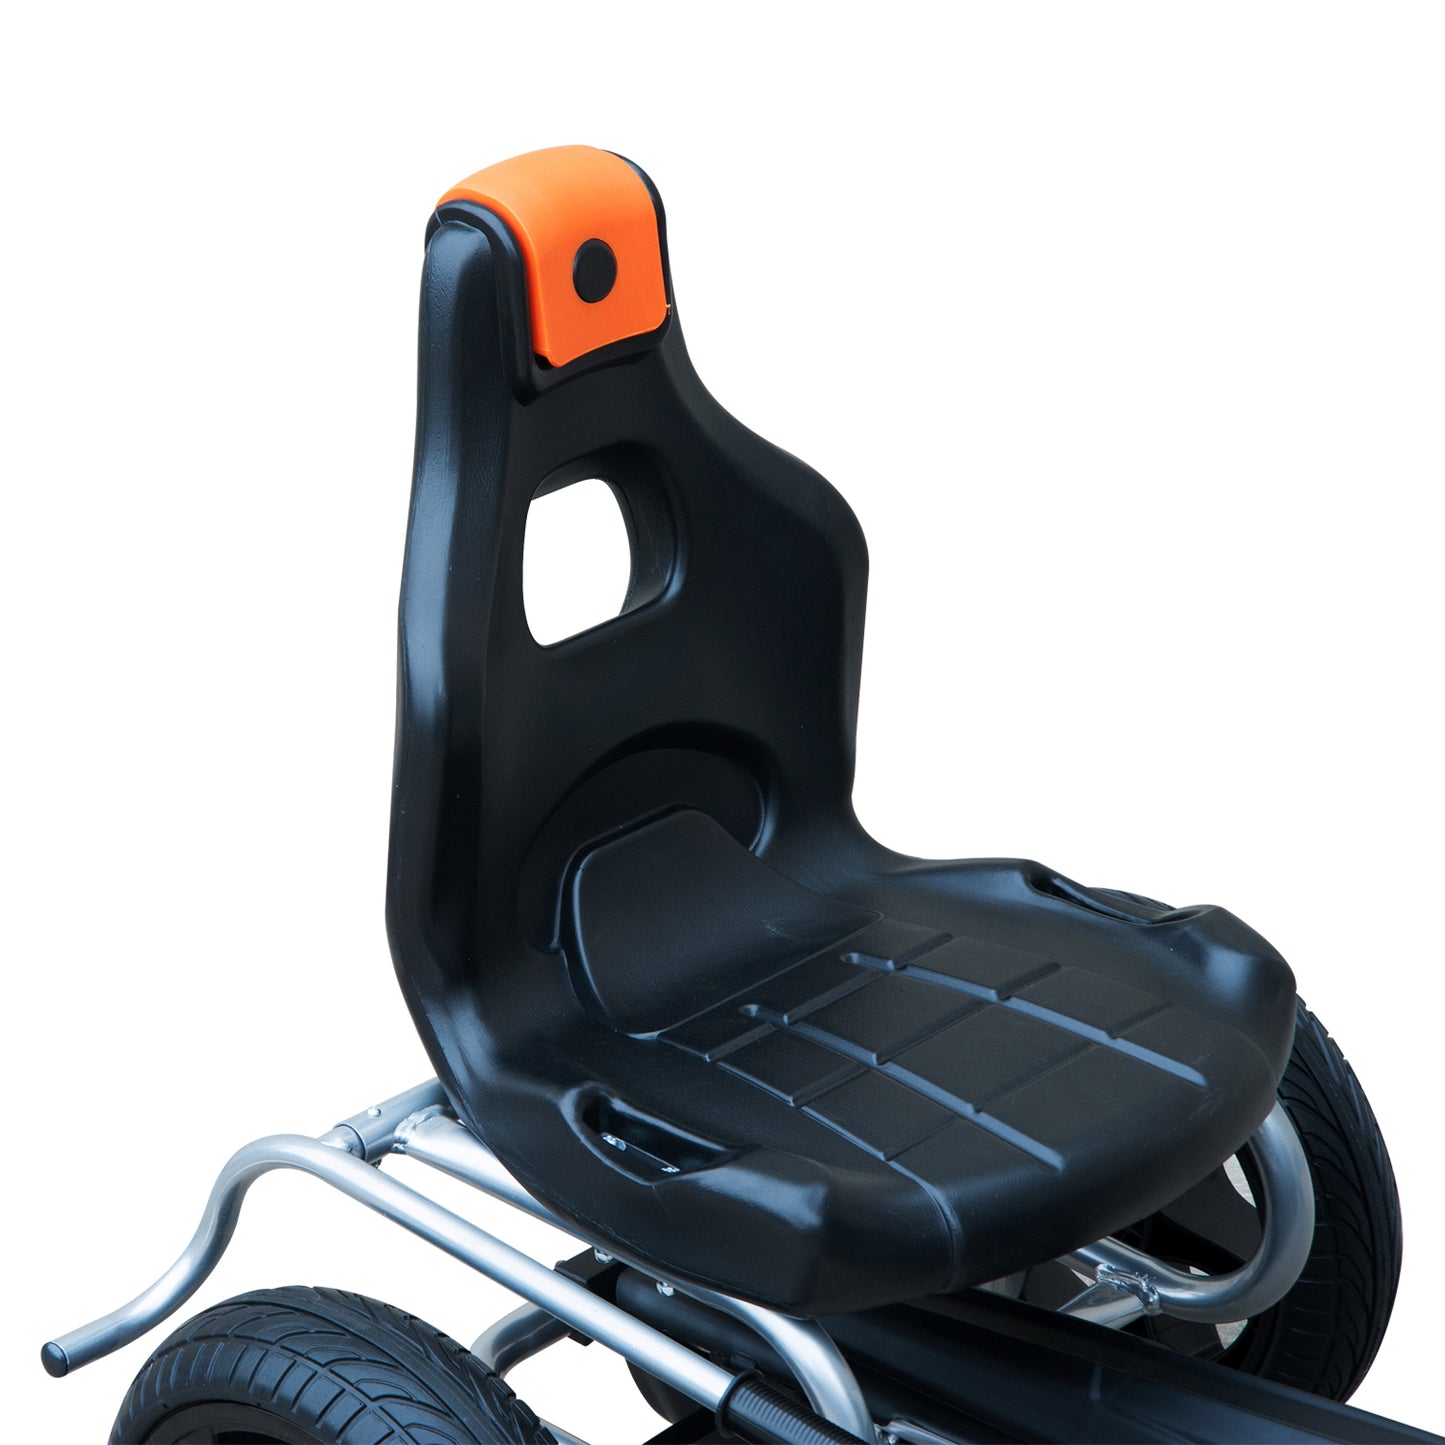 HOMCOM Kids Ride On Pedal Go Kart Indoor Outdoor Sports Toy Braking System-Orange/Black